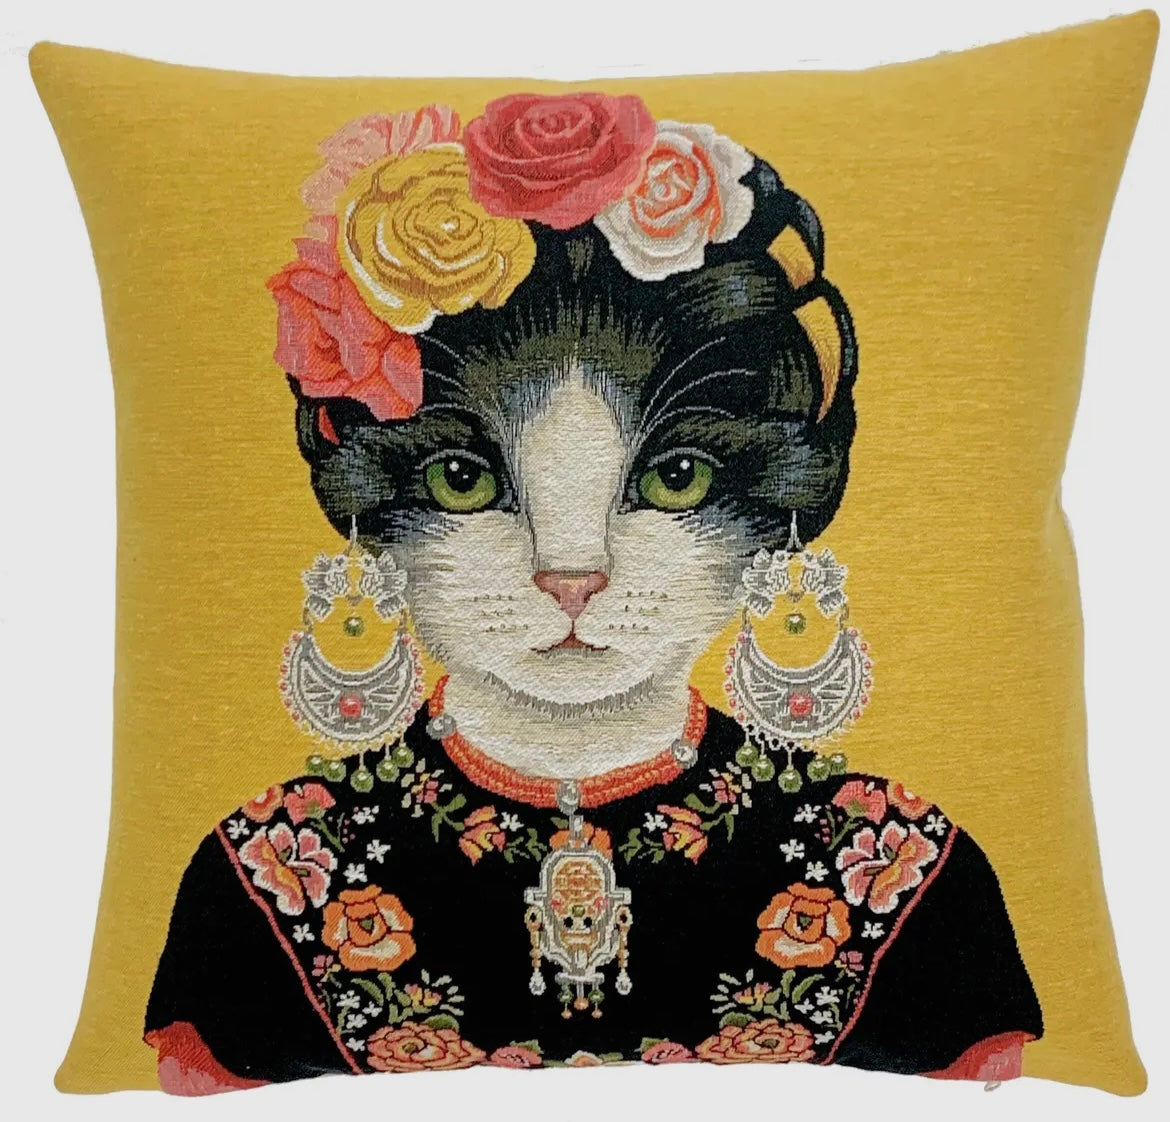 Frida Khalo cat cushion cover